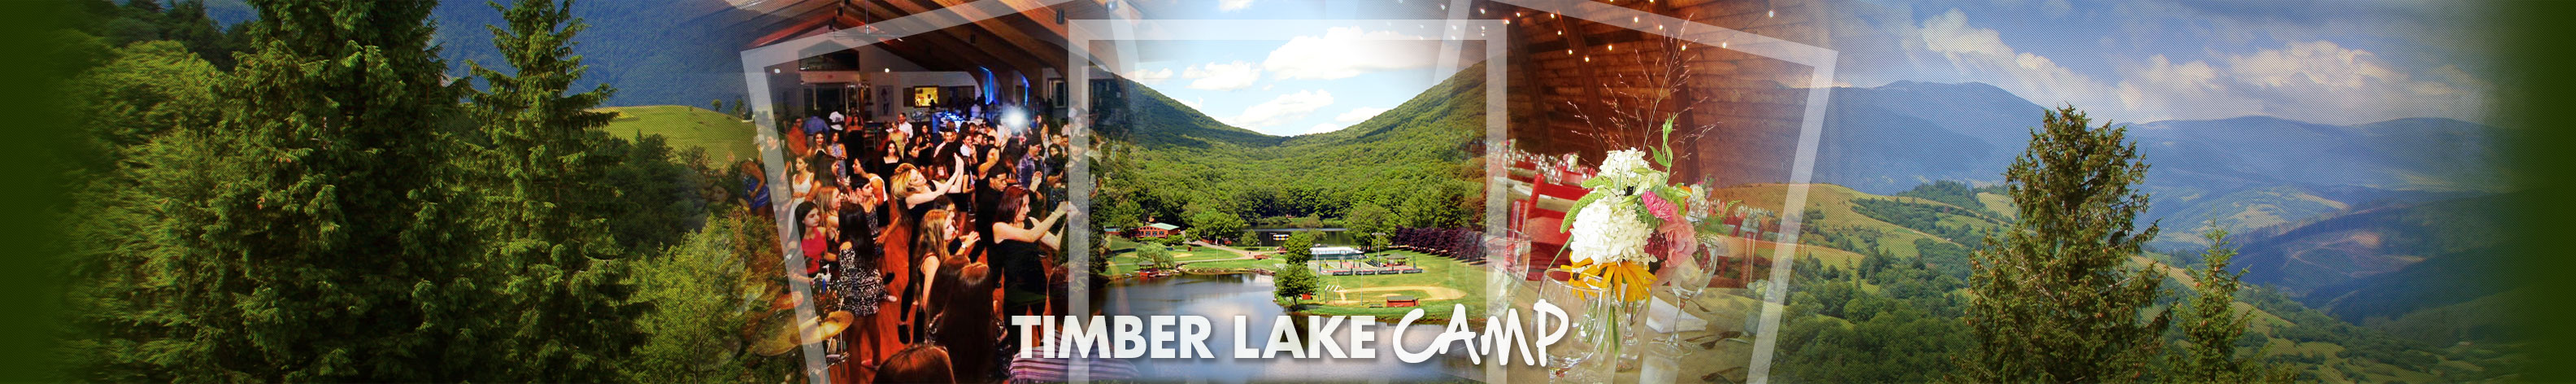 timber lake camp rentals